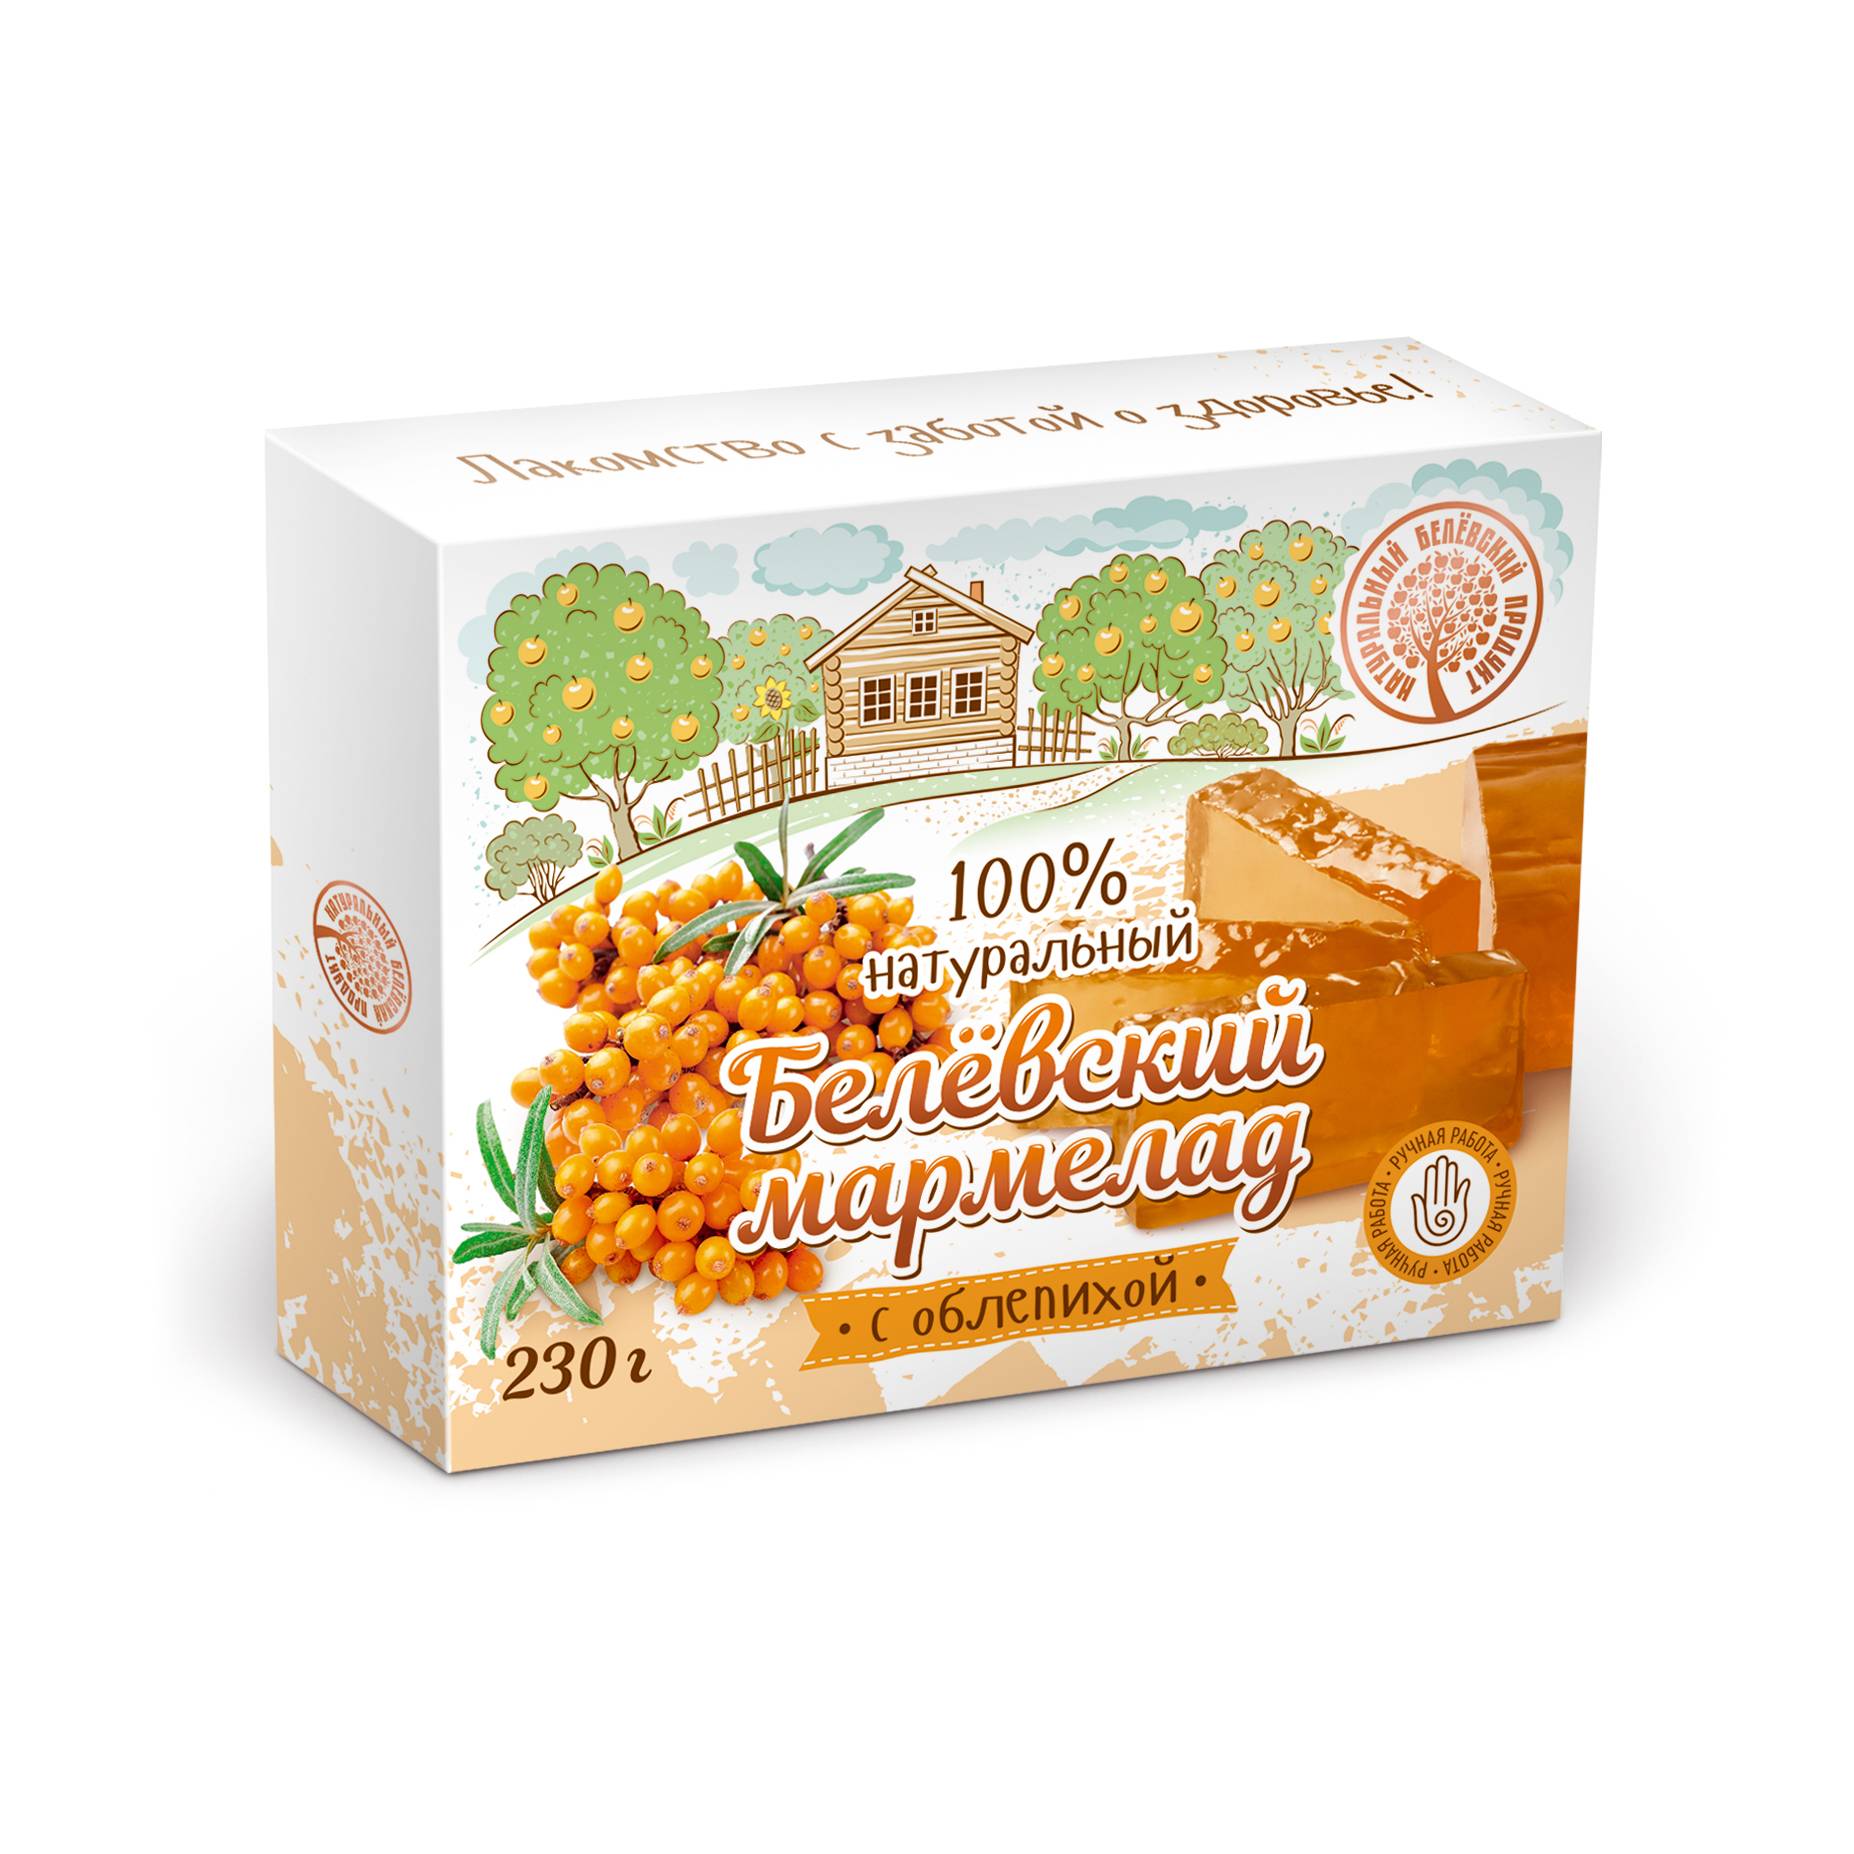 Marmelada naturala de Catina Belevsky product, 230 gr. image